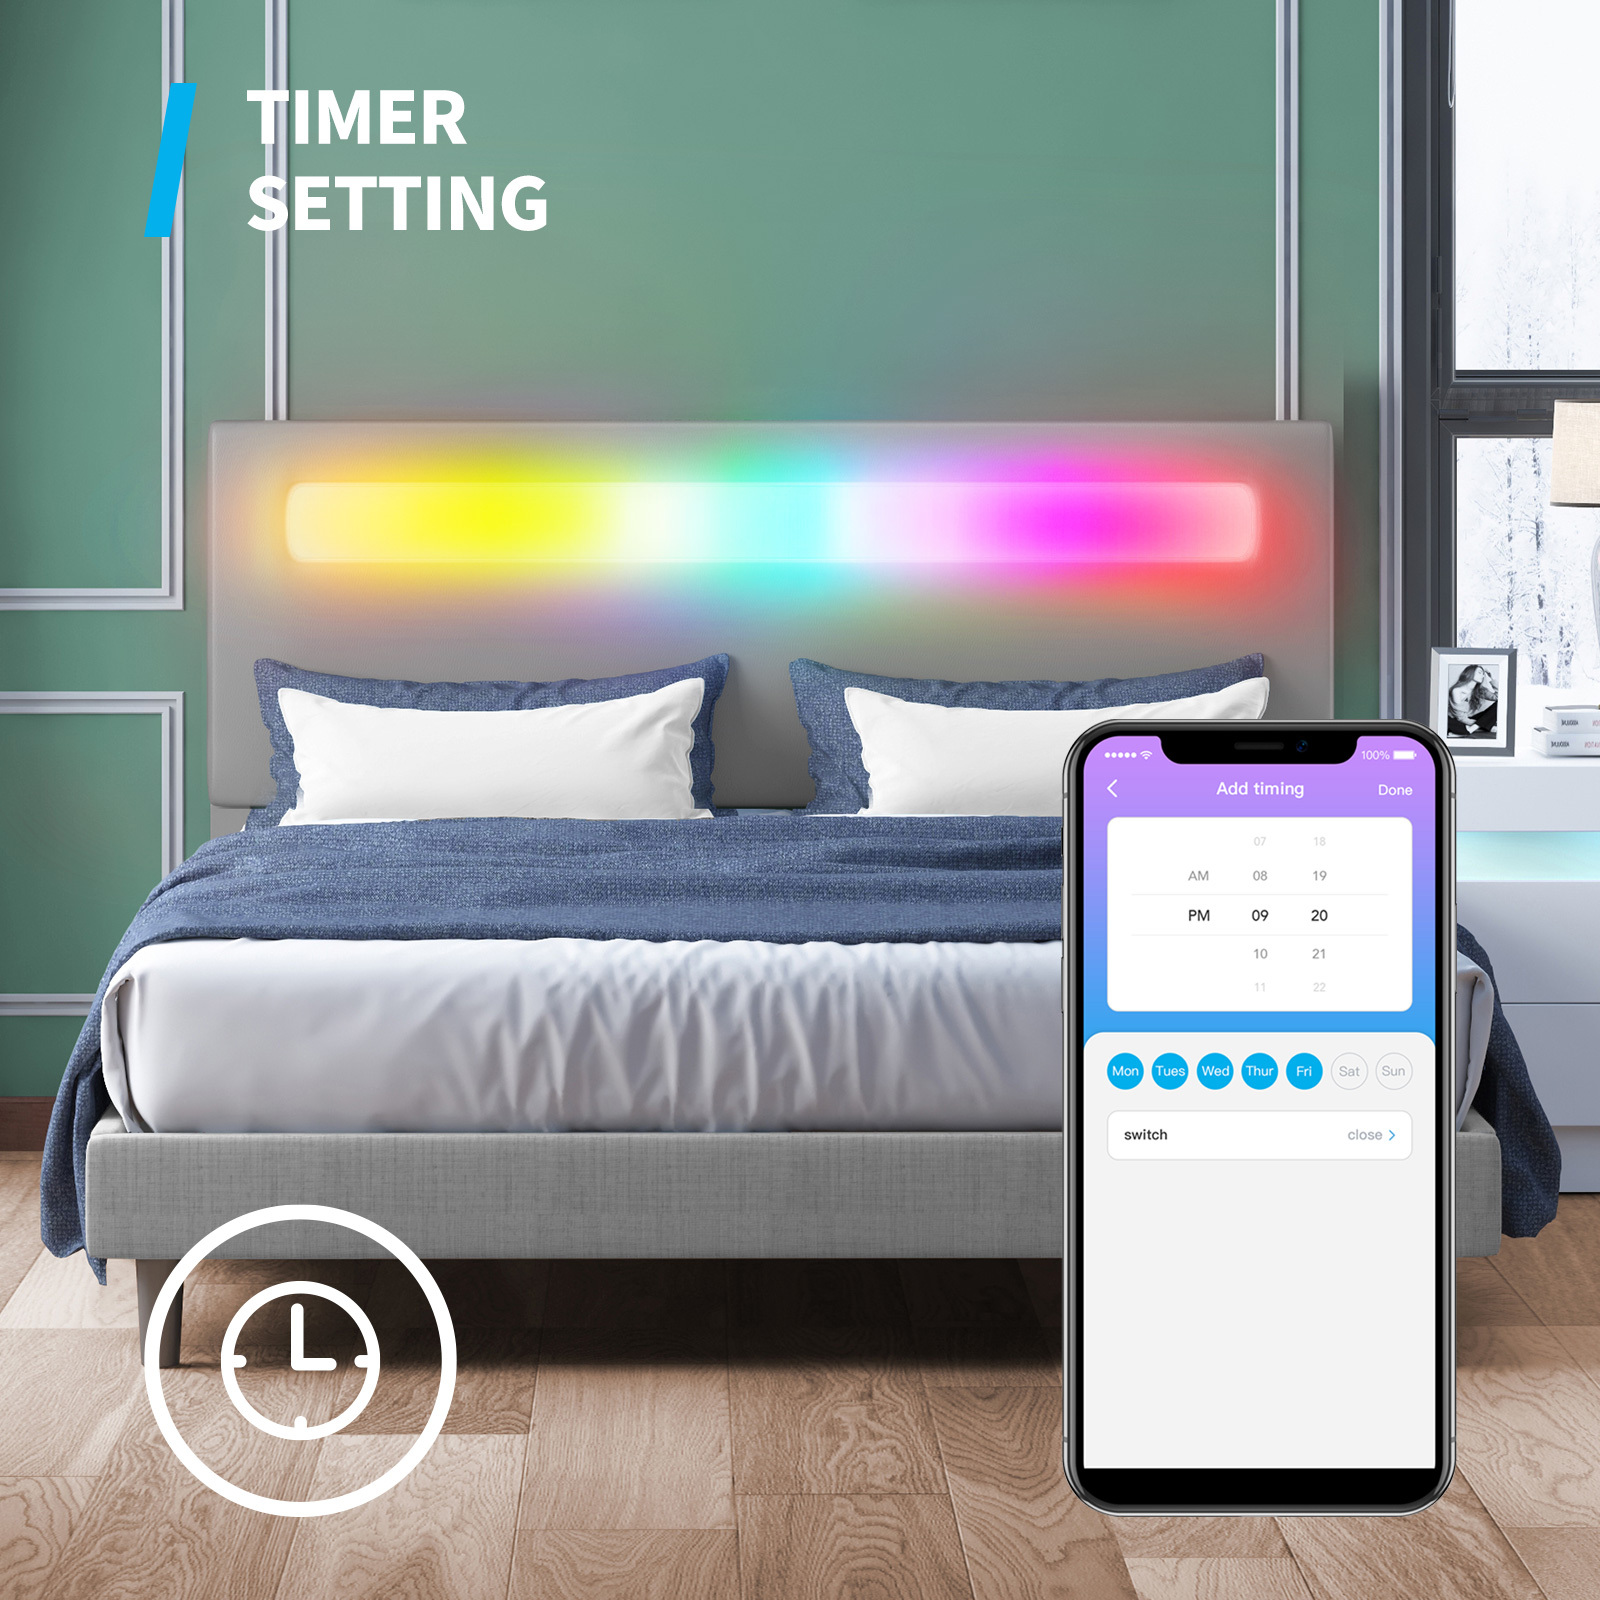 Mjkone Platform Bed Frame with Smart LED Strip Light, Full Size Bed Frame with RGB LED Headboard, RGB LED Light Controlled by Alexa or APP, Full Bed Frames Adjustable Lighting Effects (Full, Grey) - image 4 of 10